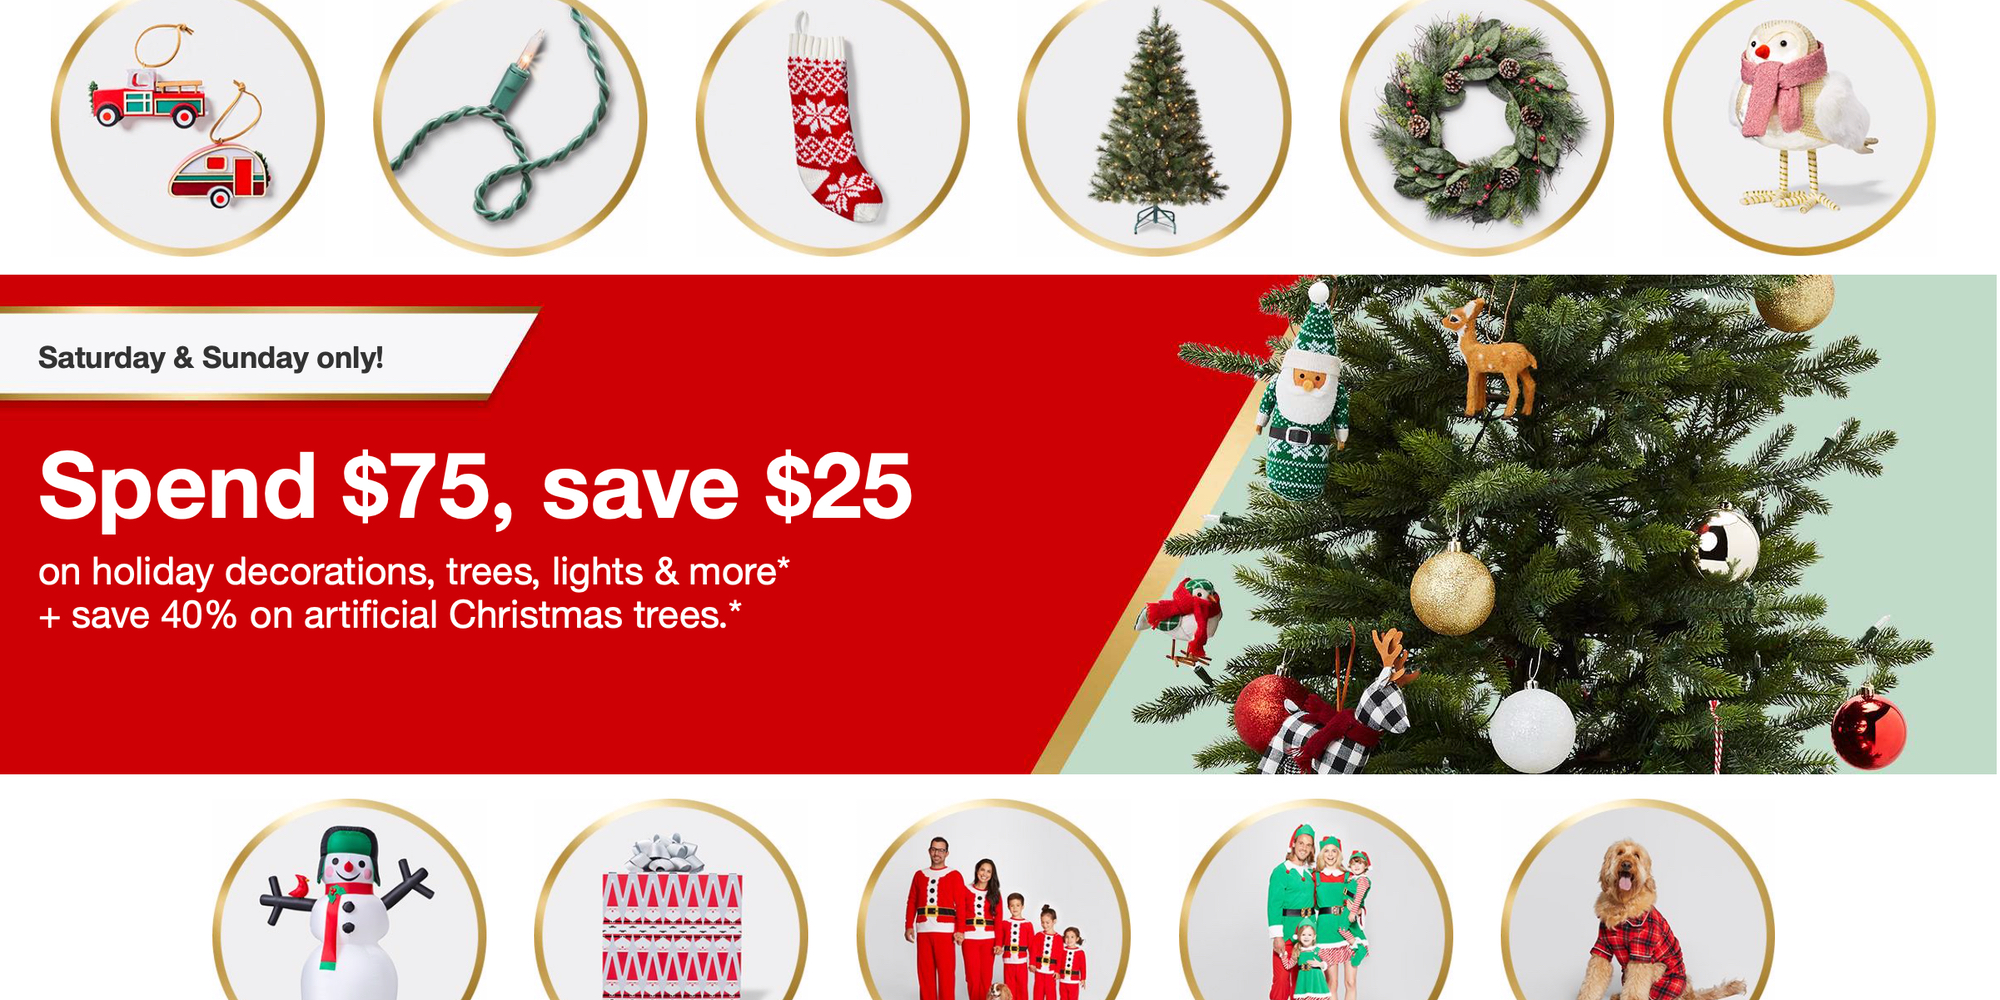 Wireless Christmas Tree Light Controller - Wondershop™ : Target